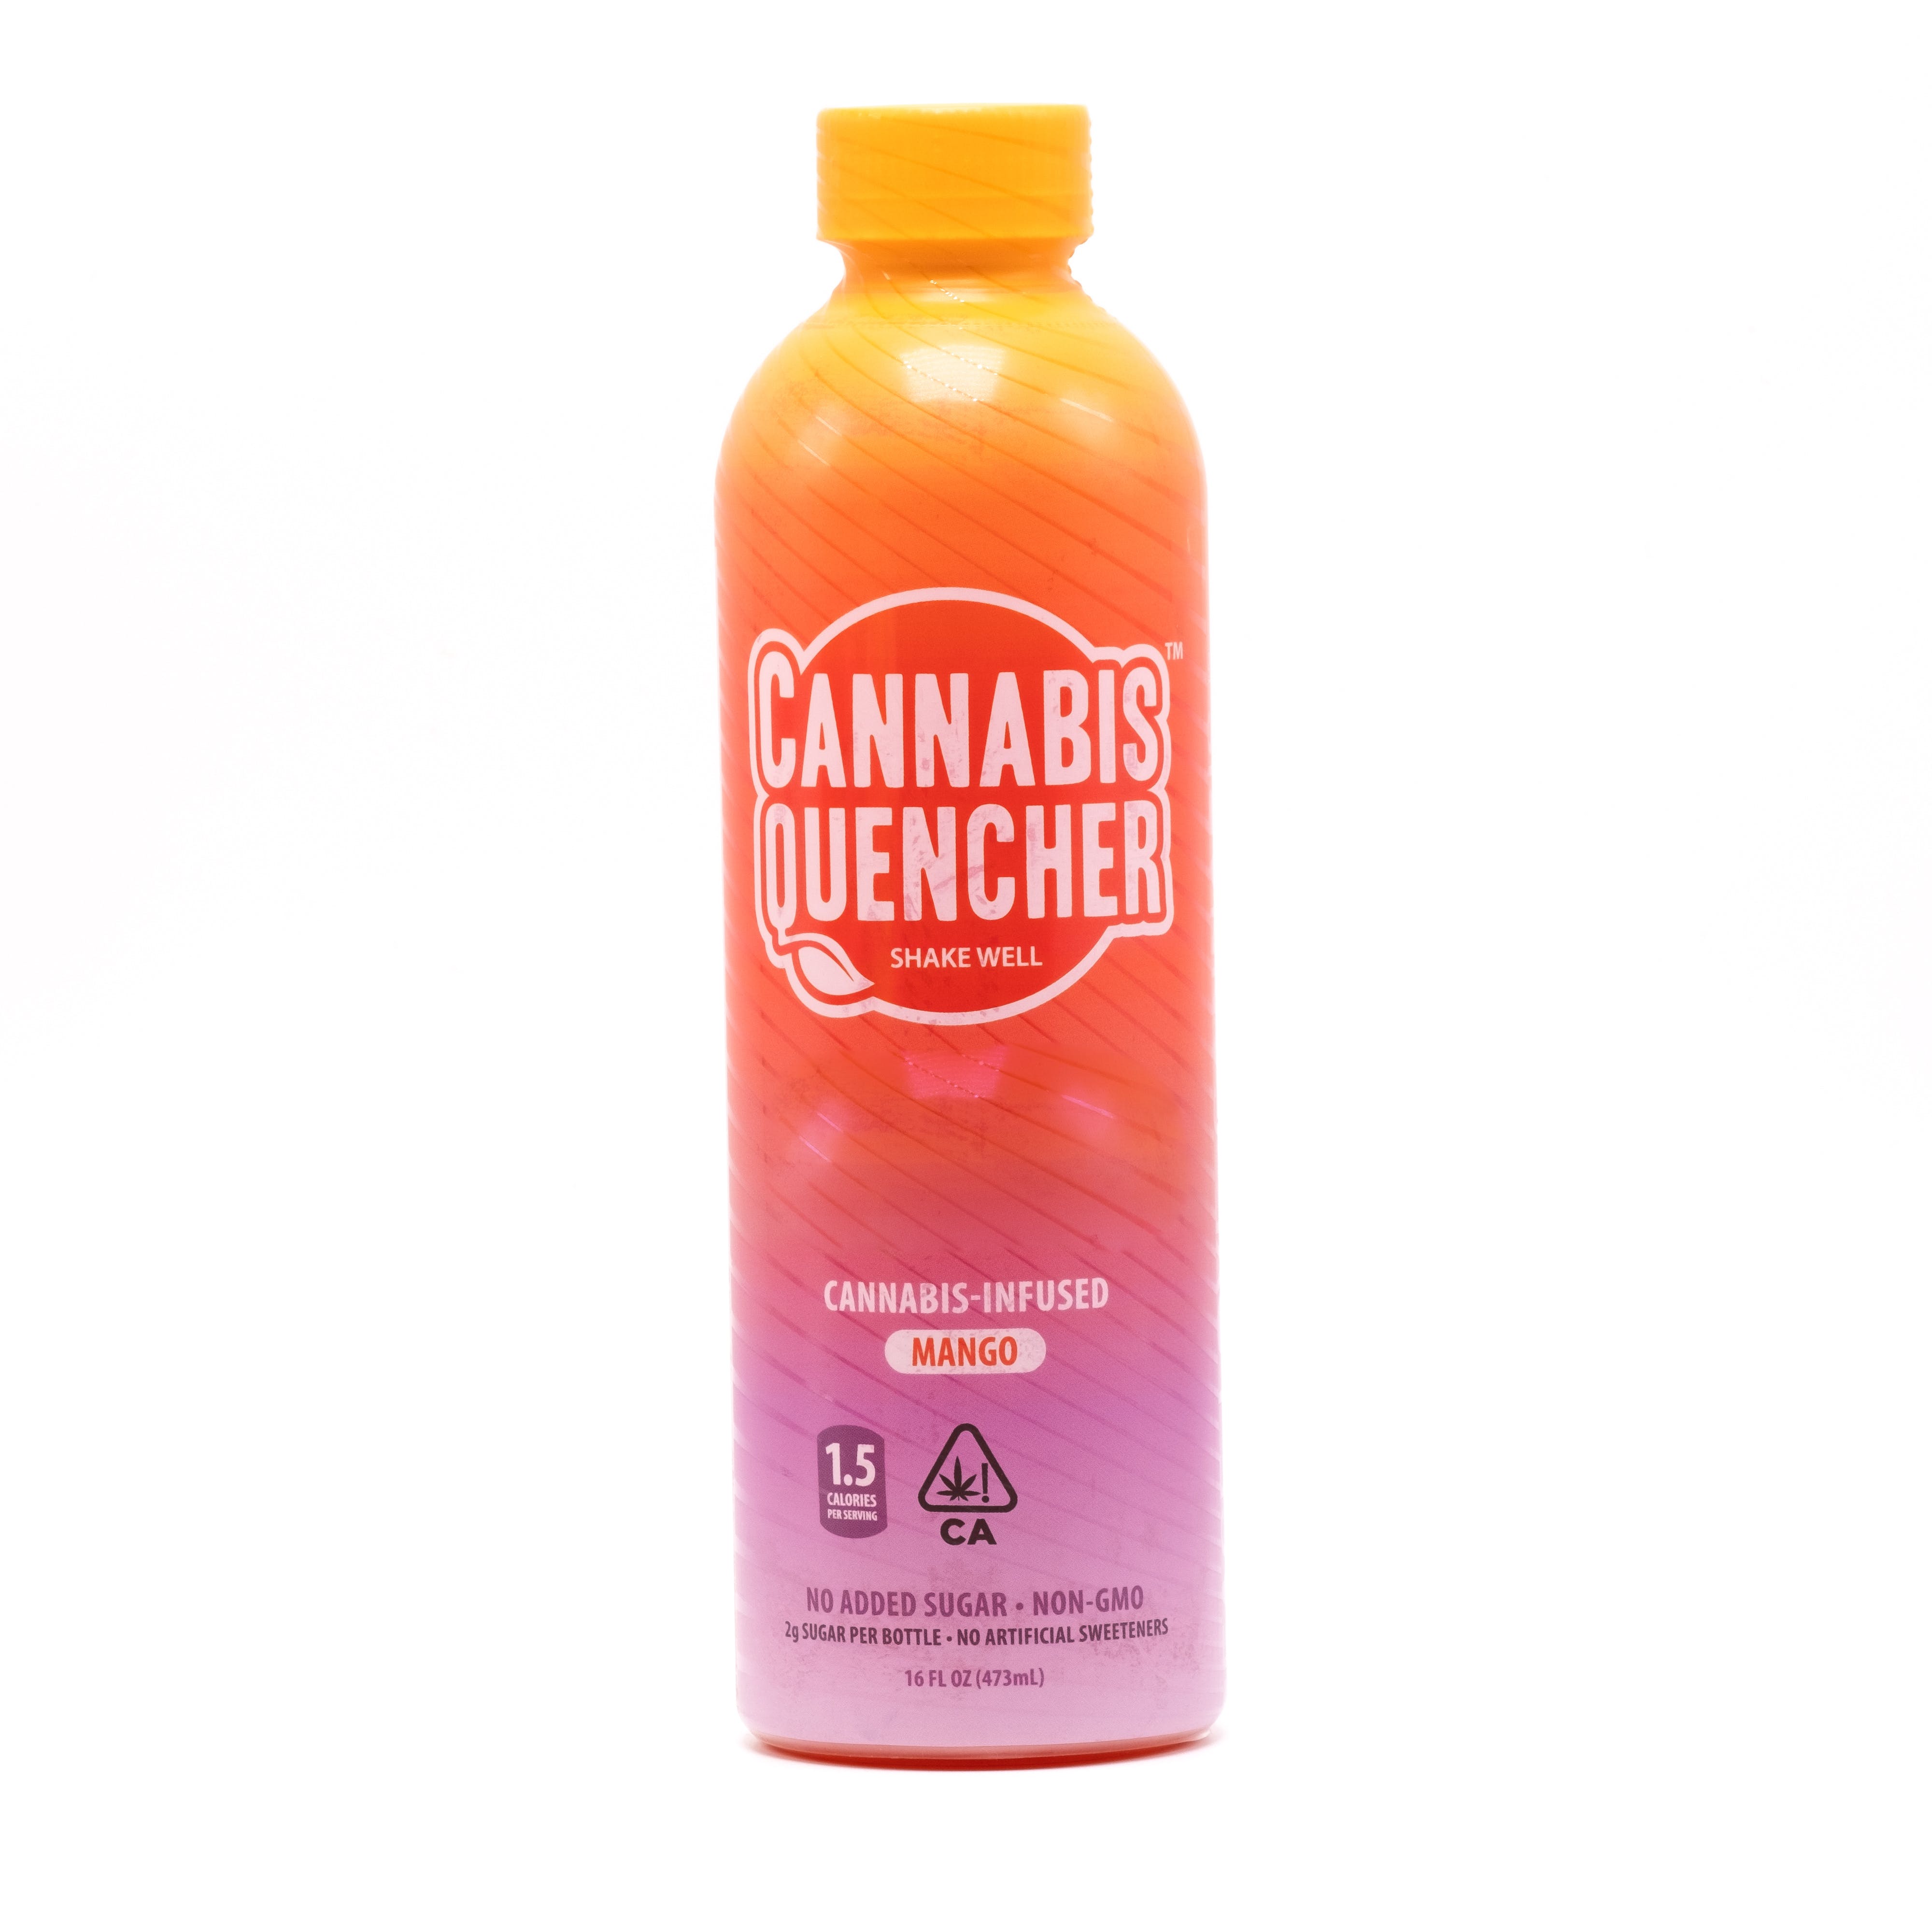 marijuana-dispensaries-4218-mission-street-san-francisco-11-cbd-mango-cannabis-quencher